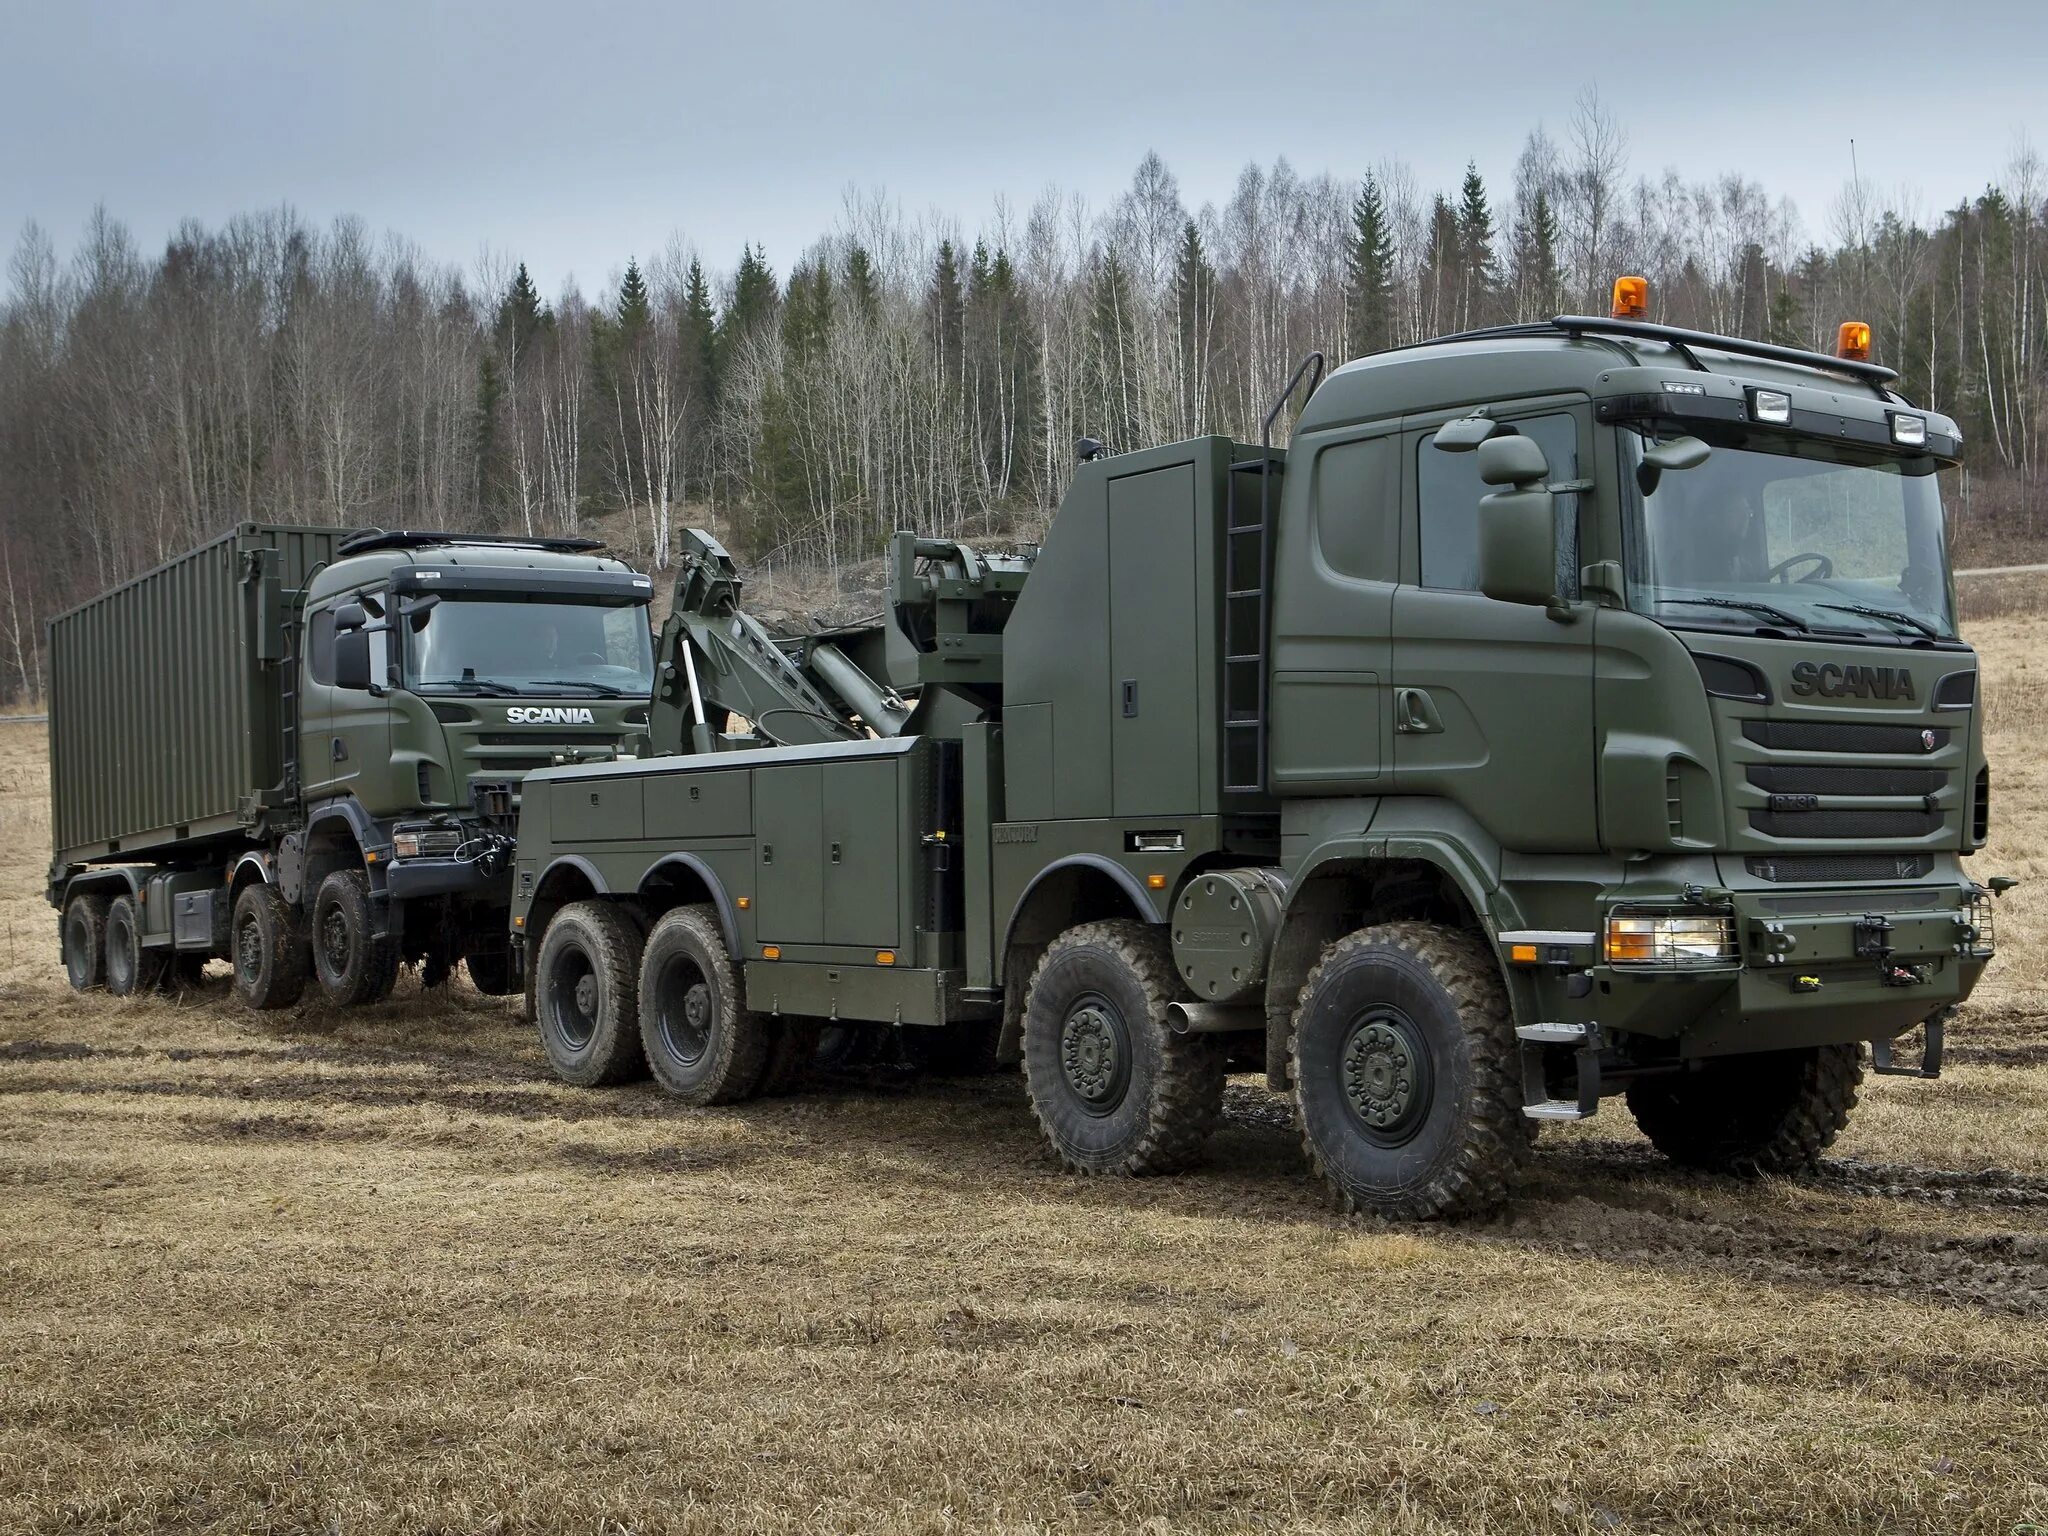 Scania r730 8x8. Скания 8х8. Скания тягач 8x8. Scania Military 8x8.